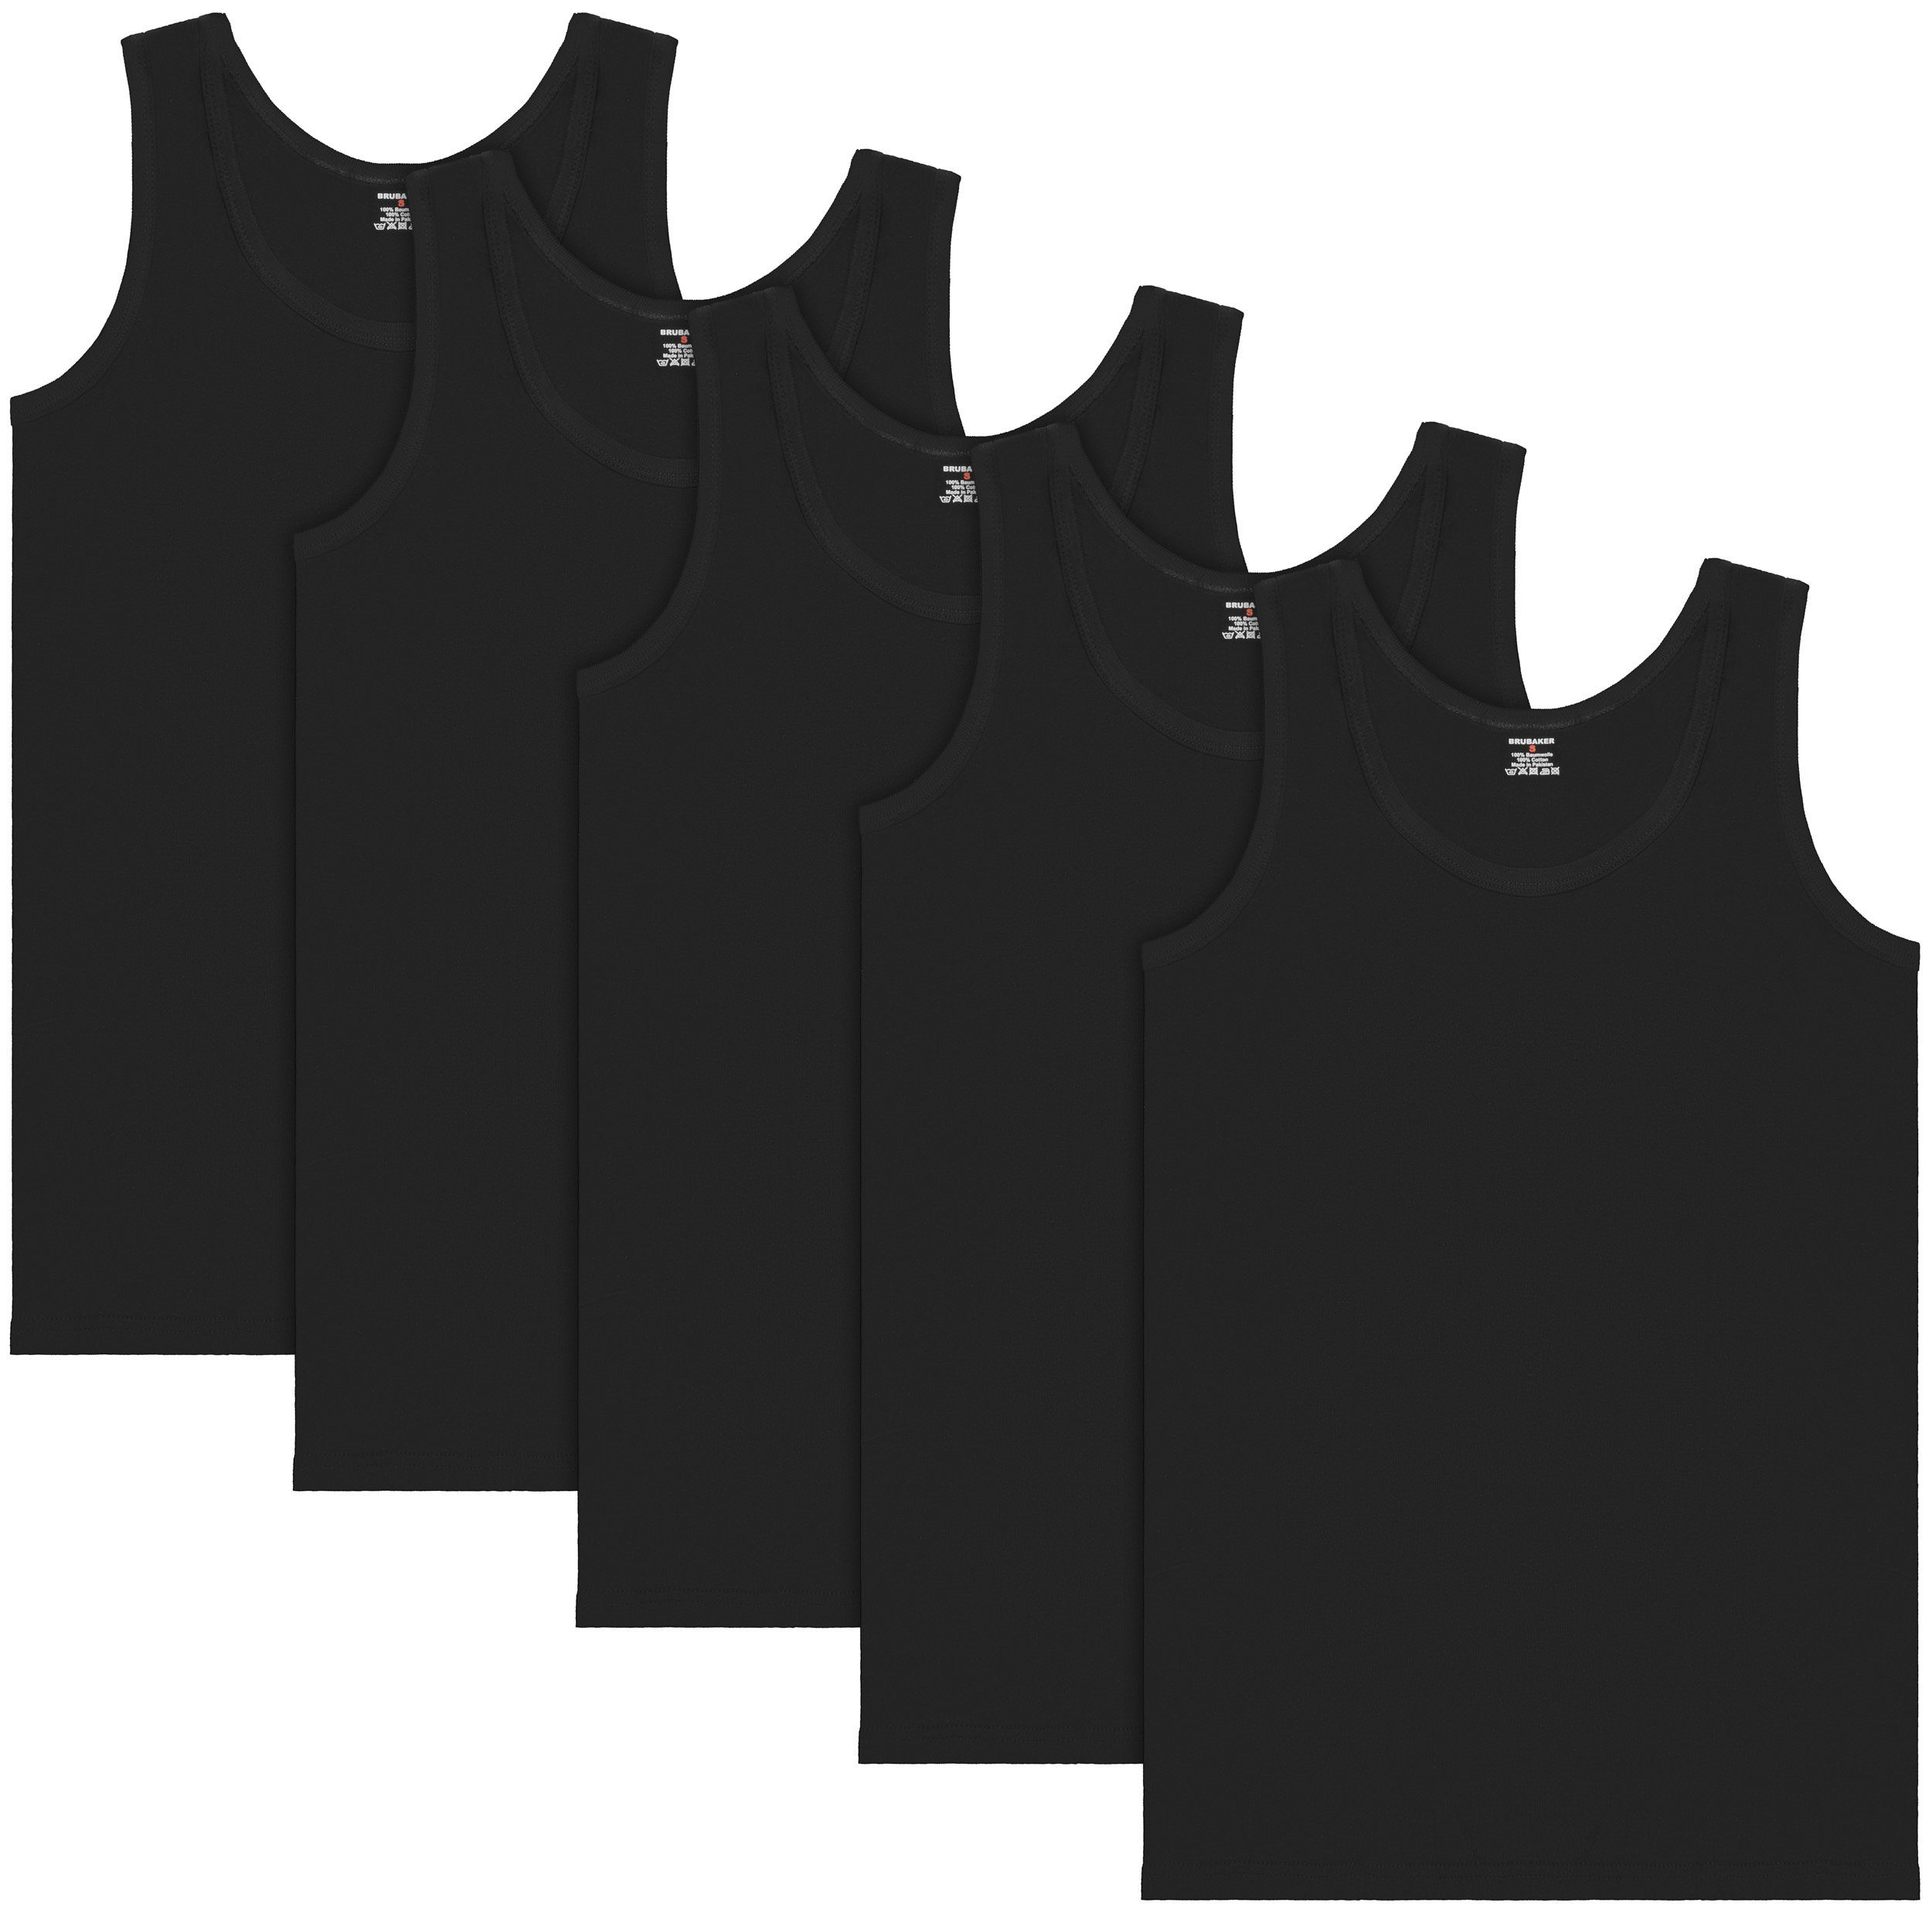 BRUBAKER Tanktop Classic Herren Unterhemd Tank Top (5er-Pack) Schlichtes Basic Achselshirt aus hochwertiger Baumwolle (glatt), Extra Lang, Nahtlos Schwarz